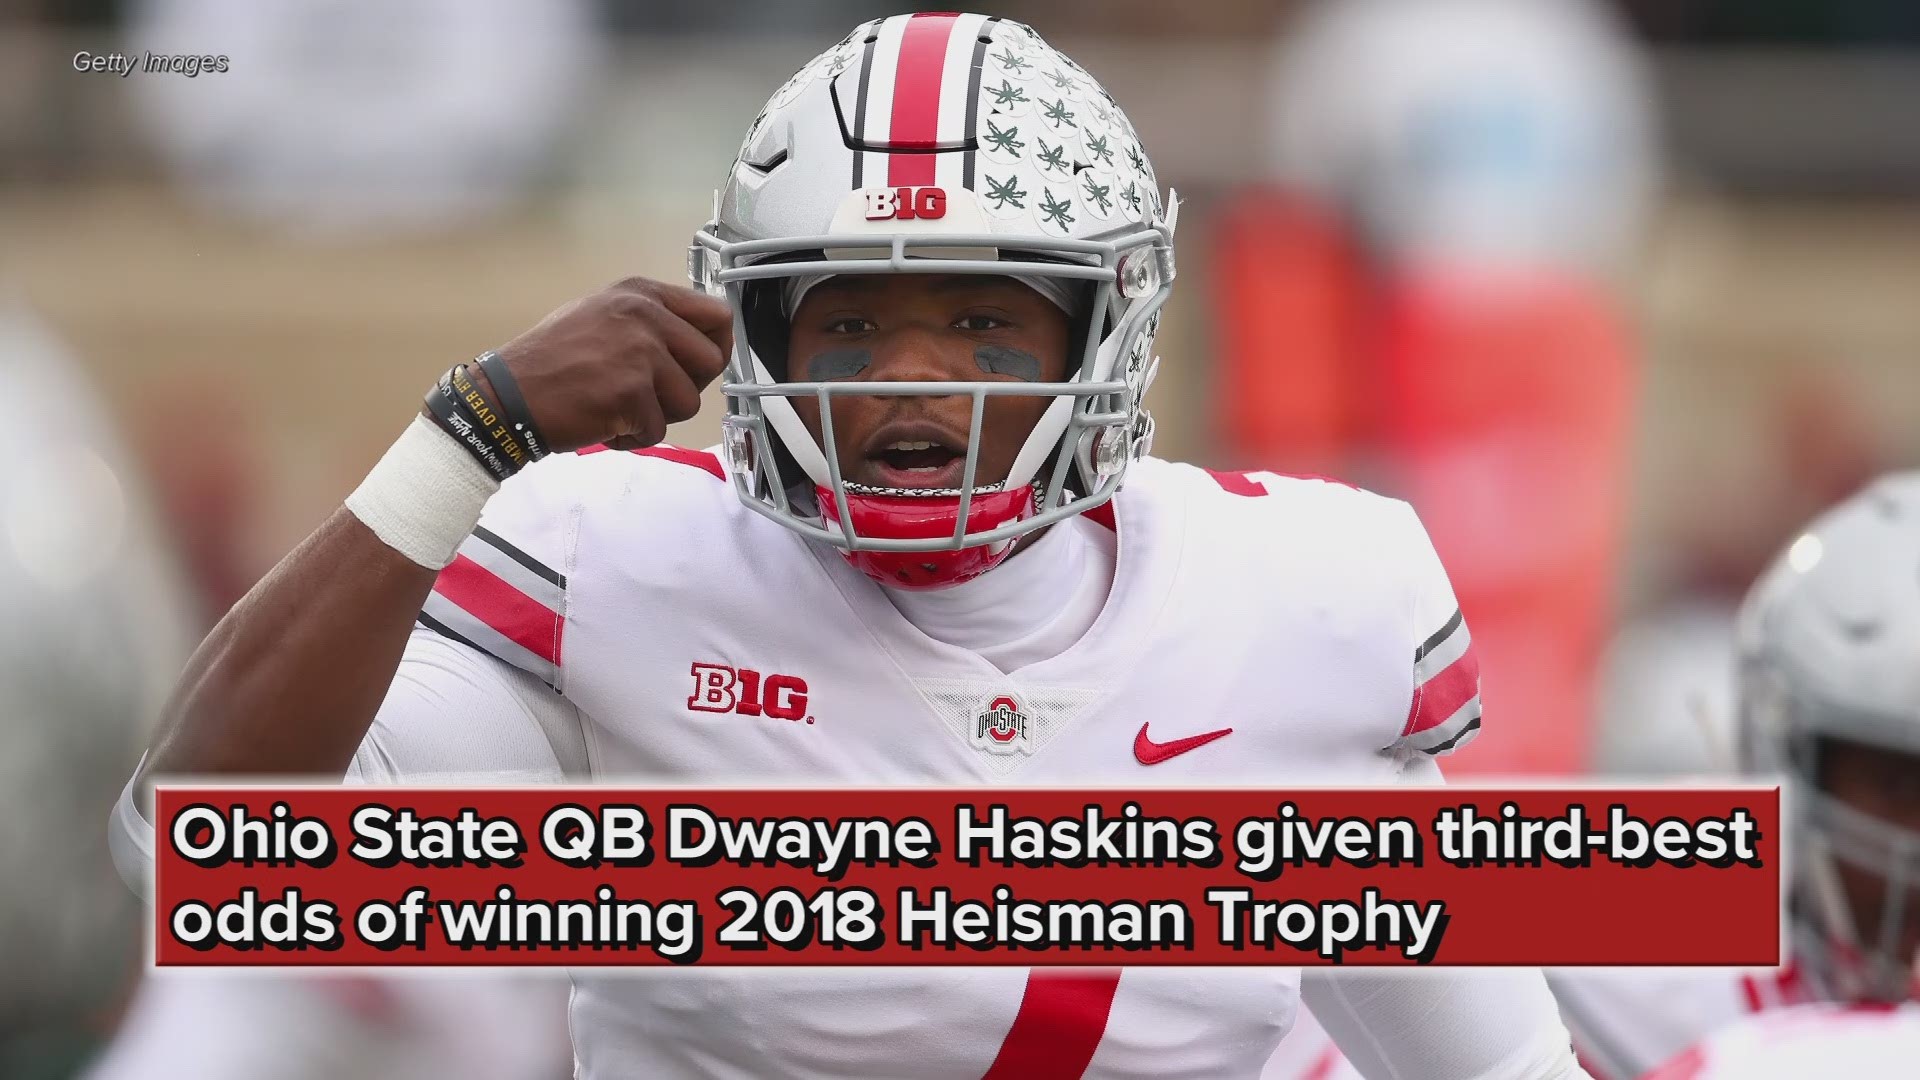 Ohio State QB Dwayne Haskins given third-best odds of winning 2018 Heisman Trophy